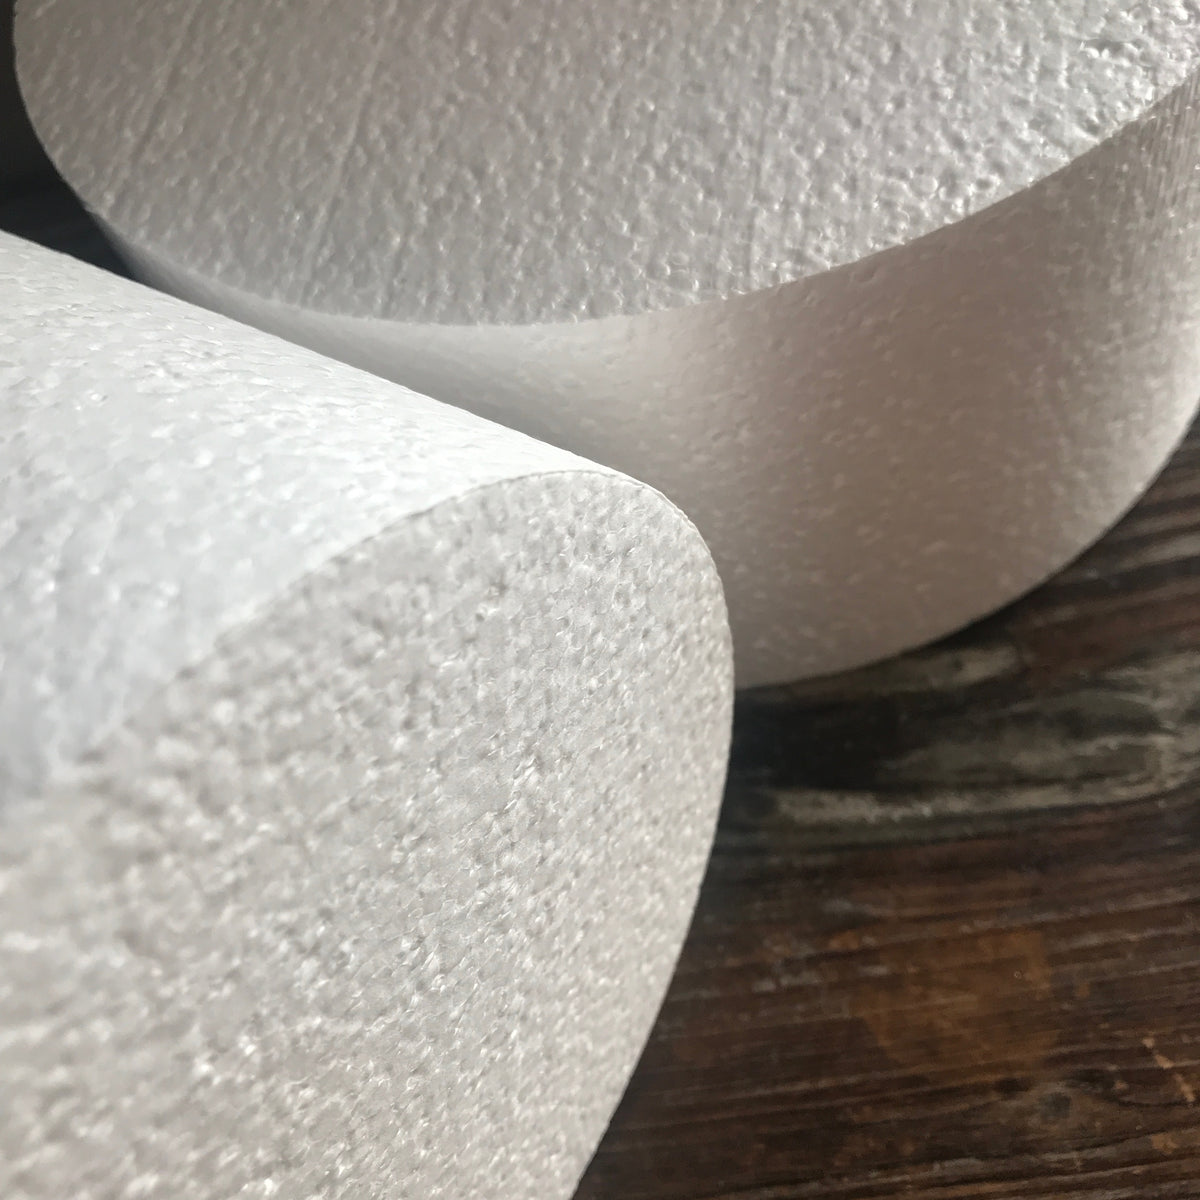 Styrofoam Cake Forms & Dummies – Sugar Art Supply